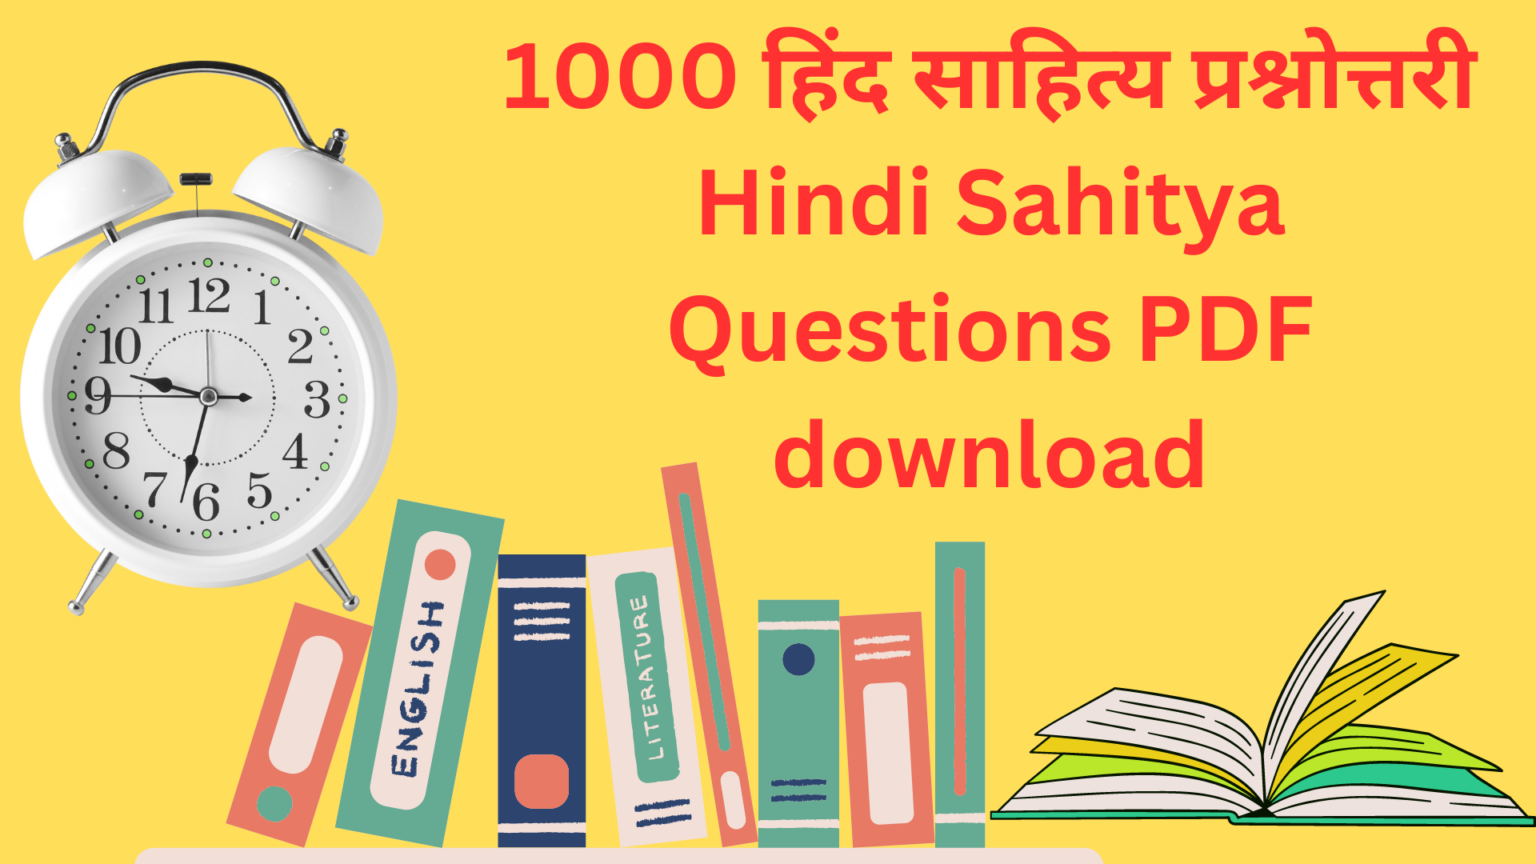 1000 हिंद साहित्य प्रश्नोत्तरी Hindi Sahitya Questions PDF download